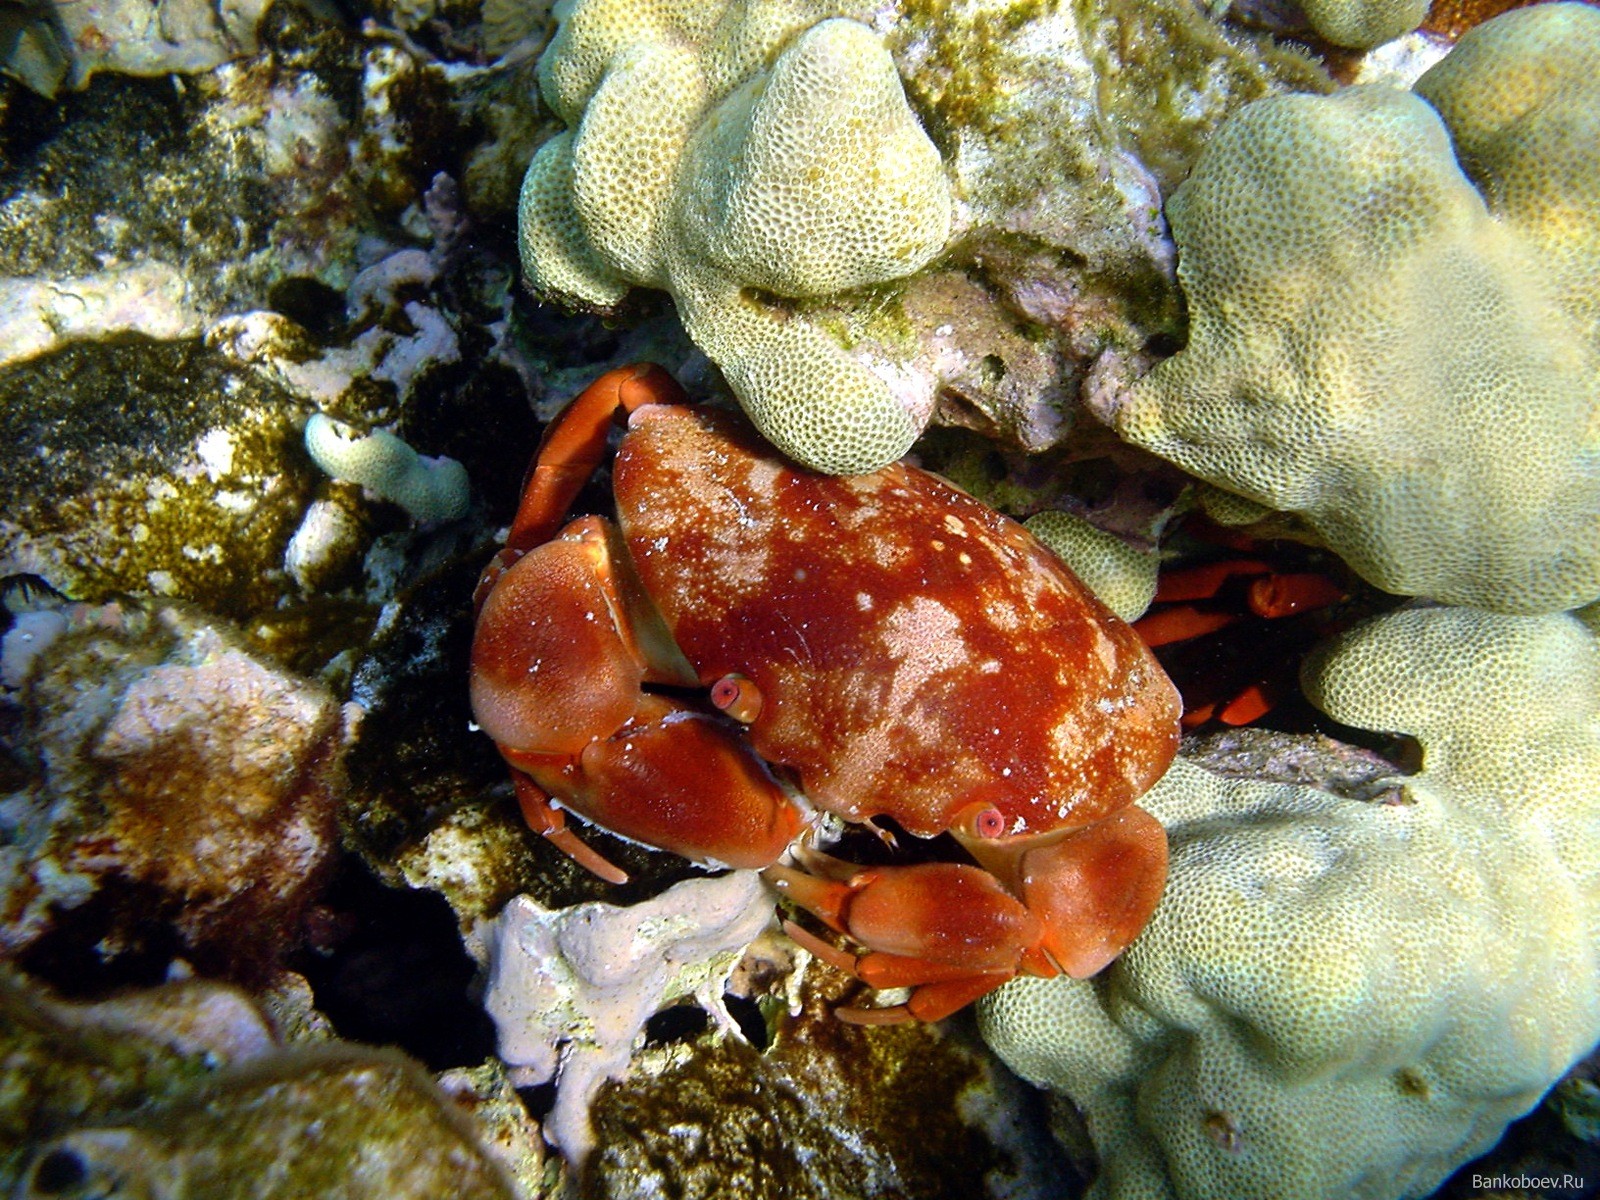 General 1600x1200 underwater sea crabs coral crustaceans animals nature